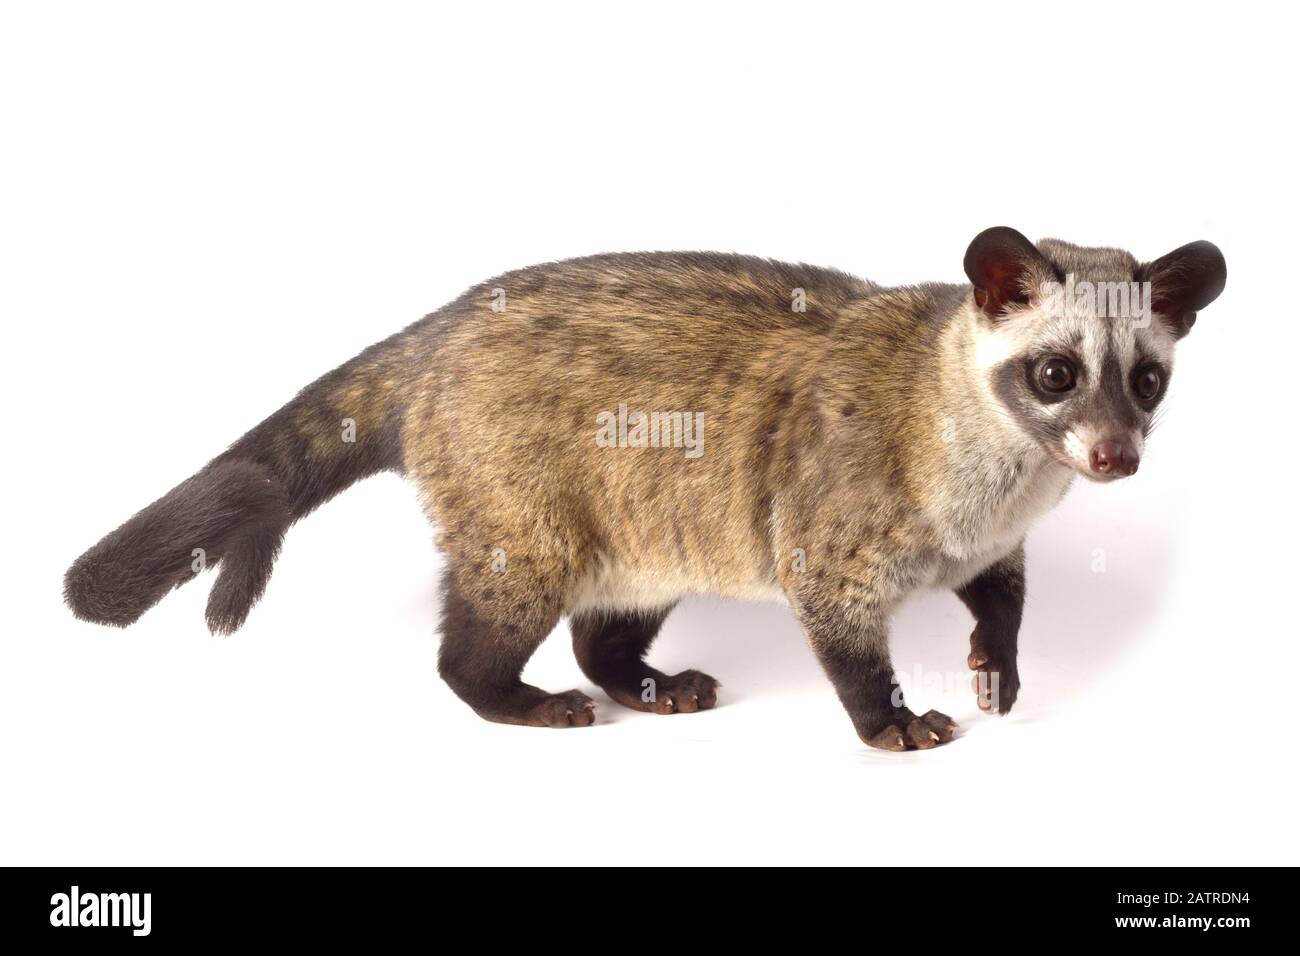 The Asian palm civet or luwak (Paradoxurus hermaphroditus). isolated on white background Stock Photo